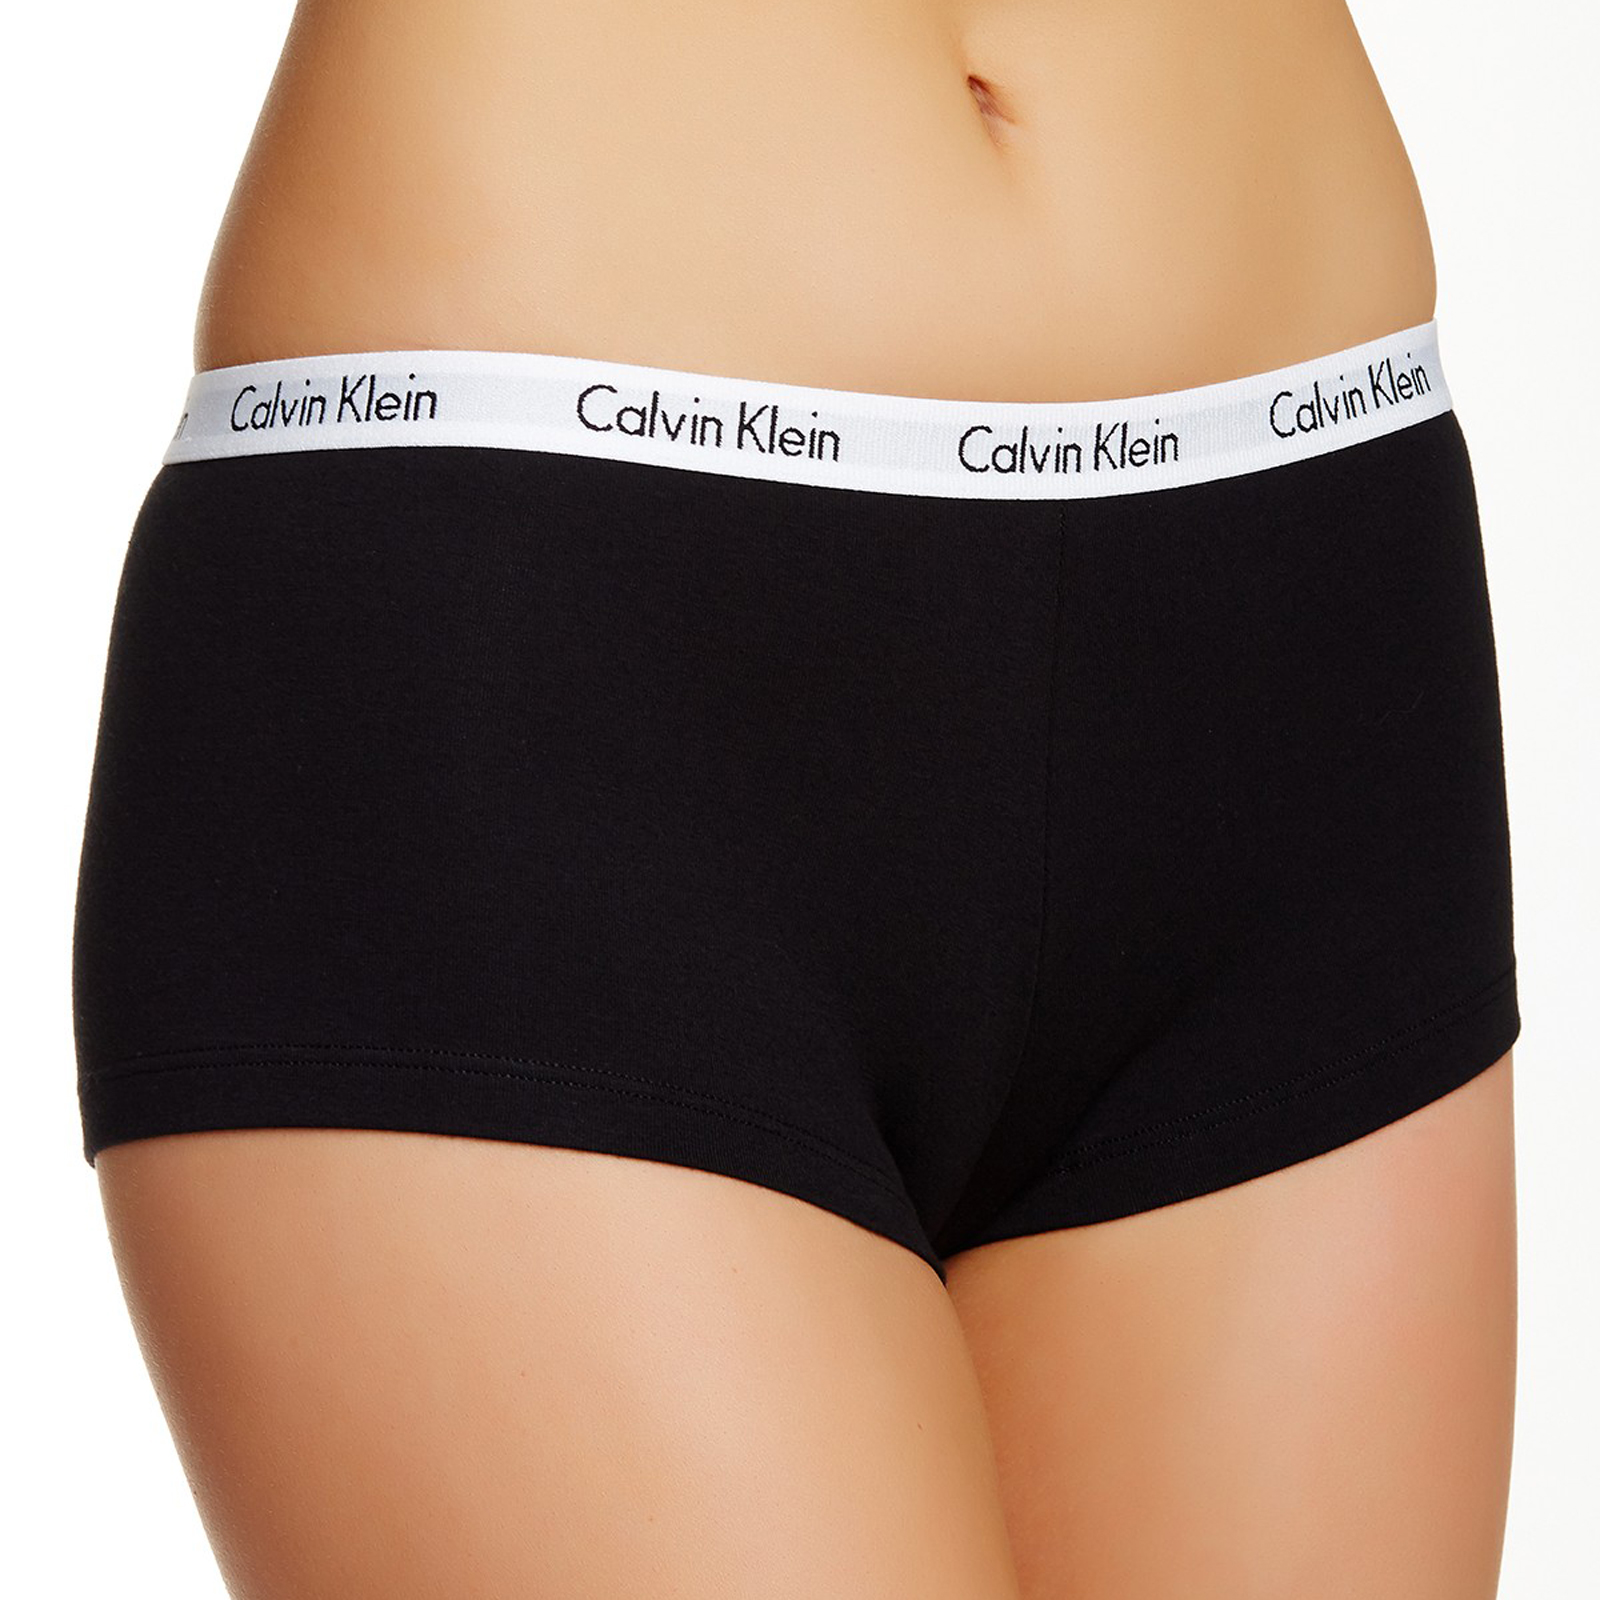 calvin-klein-logo-black-boyshort-underwear-1